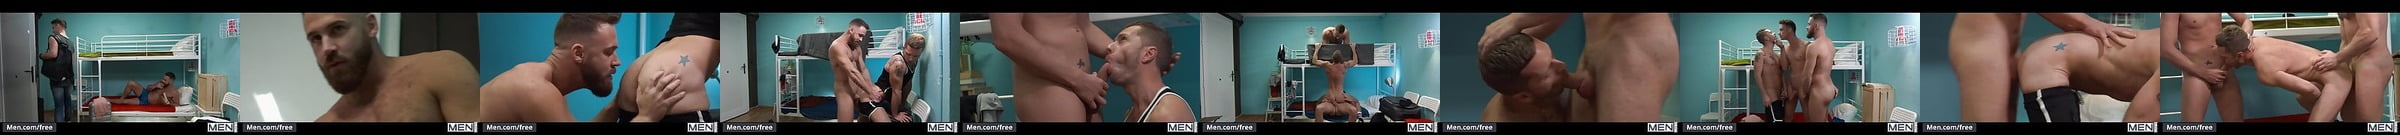 Featured Men Network Gay Porn Videos Xhamster